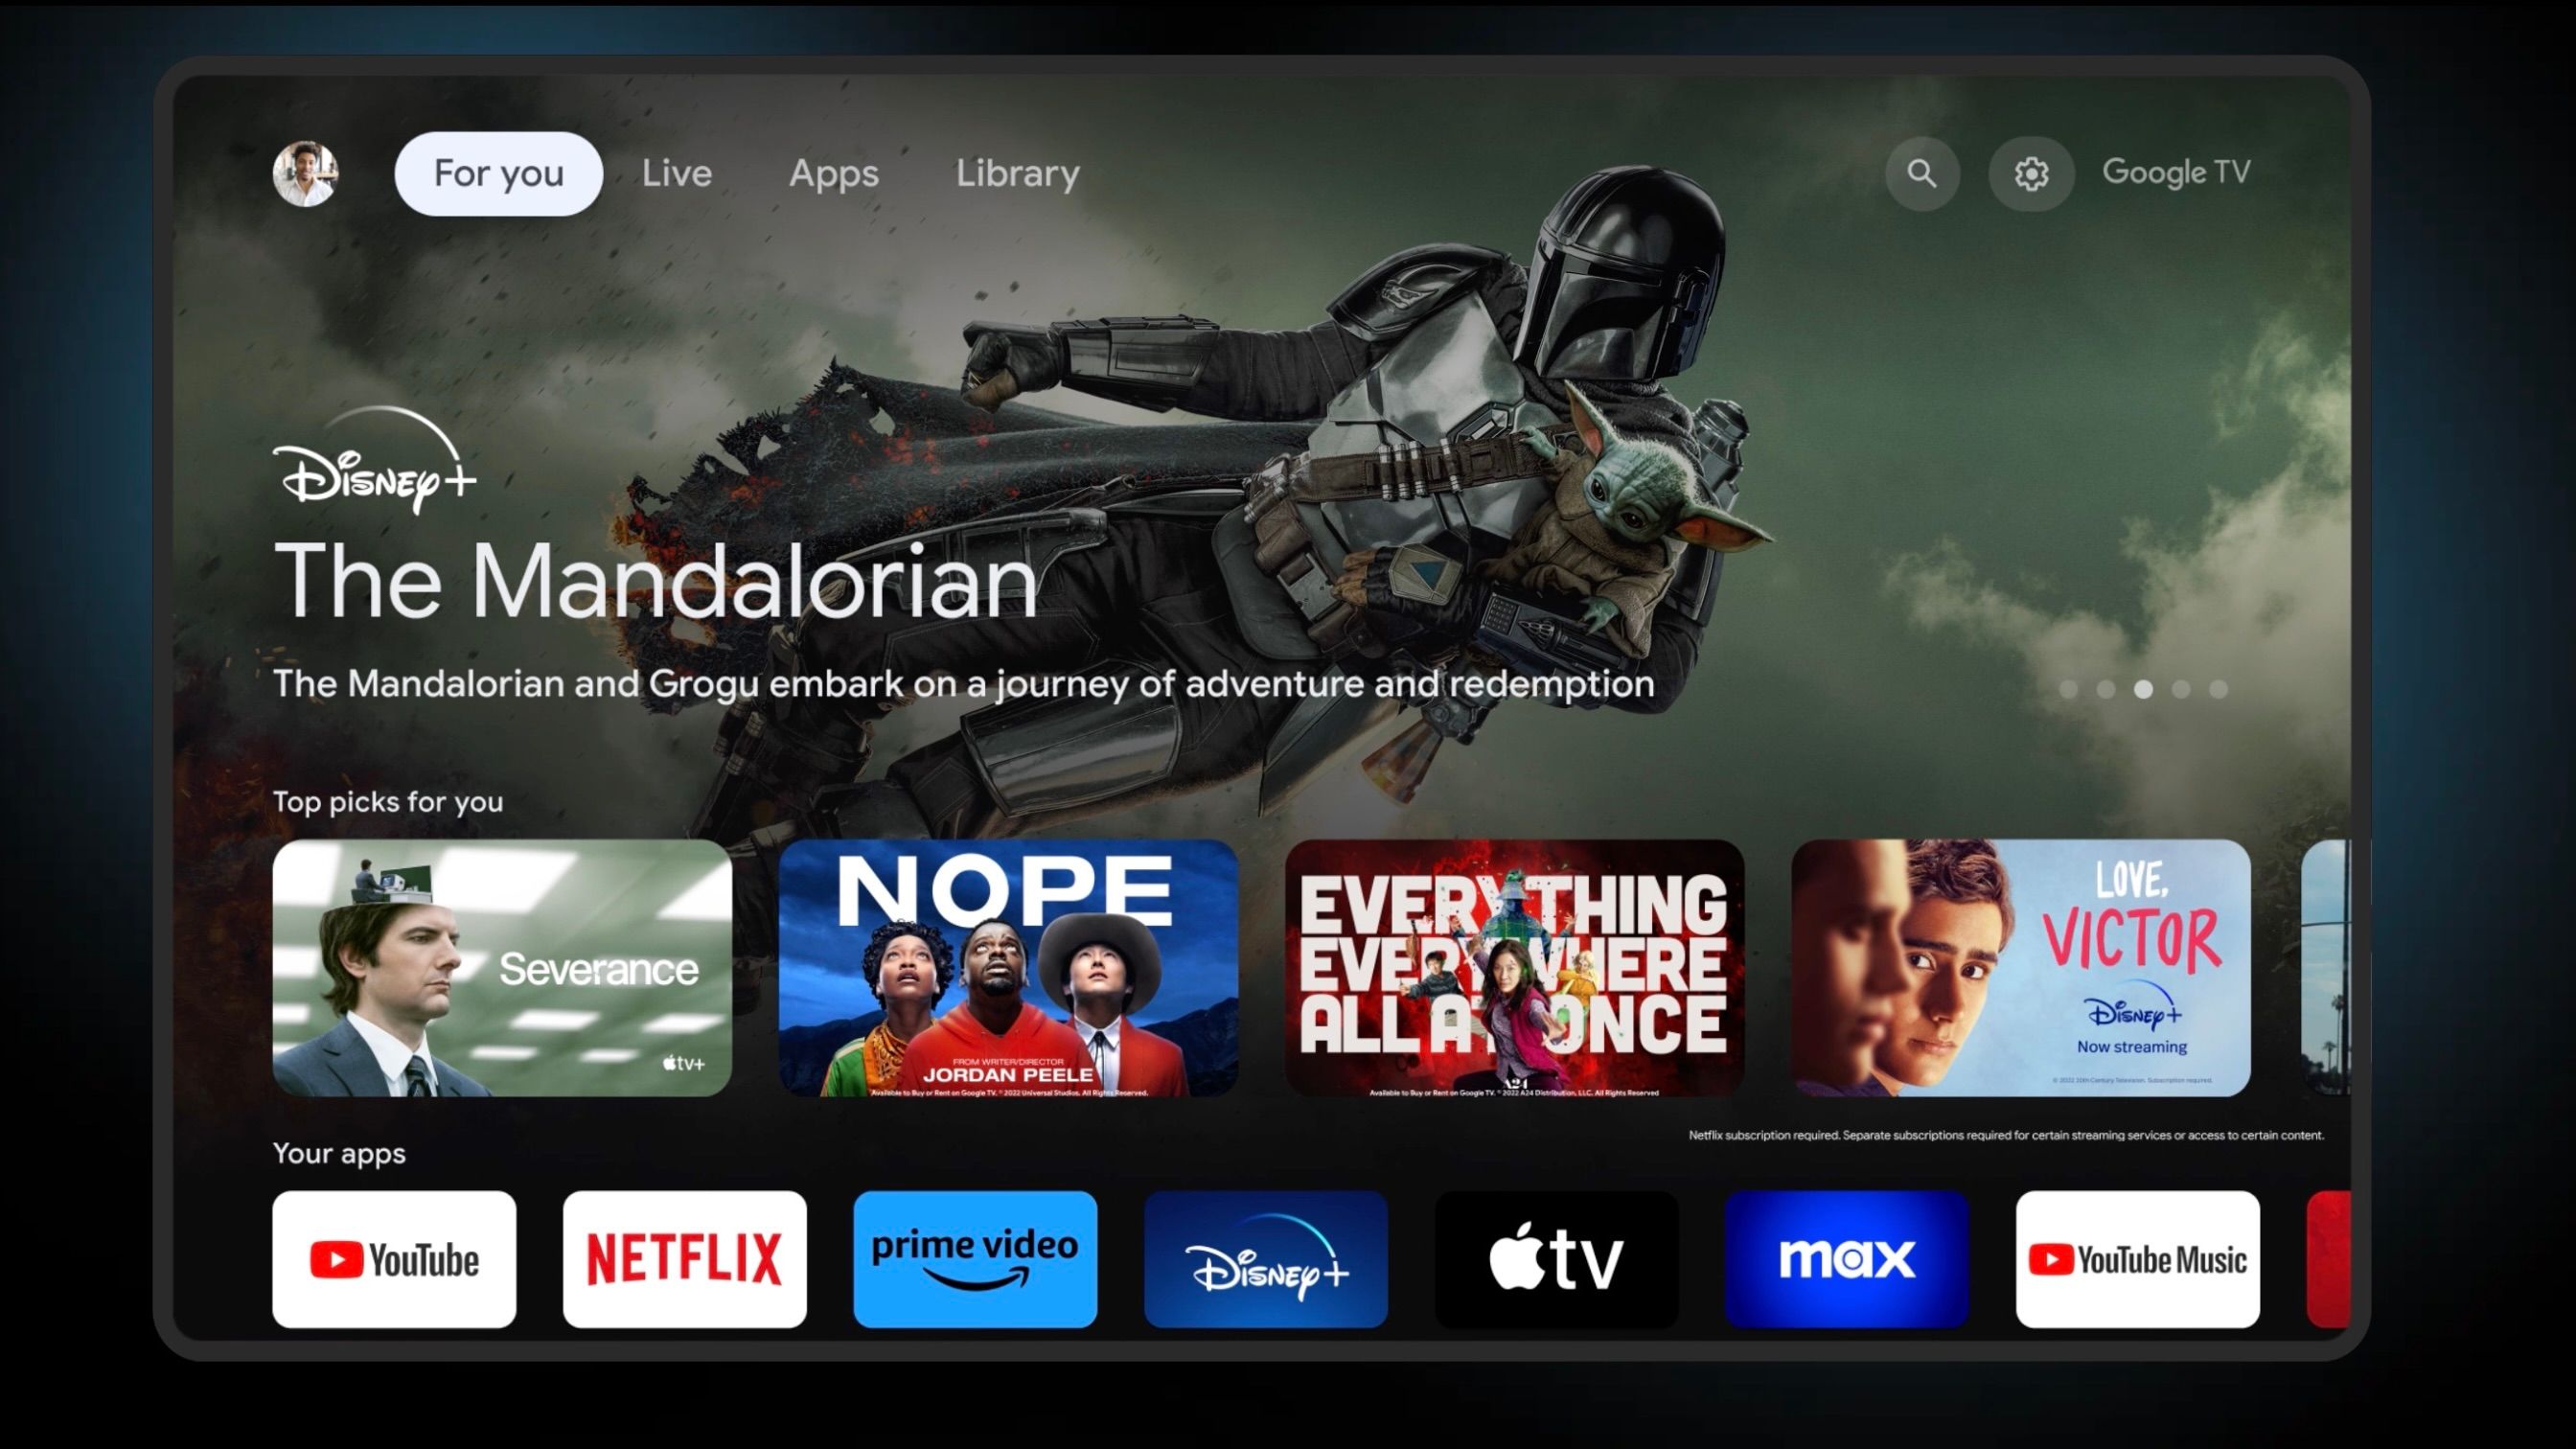 Google TV interface featuring Disney+'s The Mandalorian.